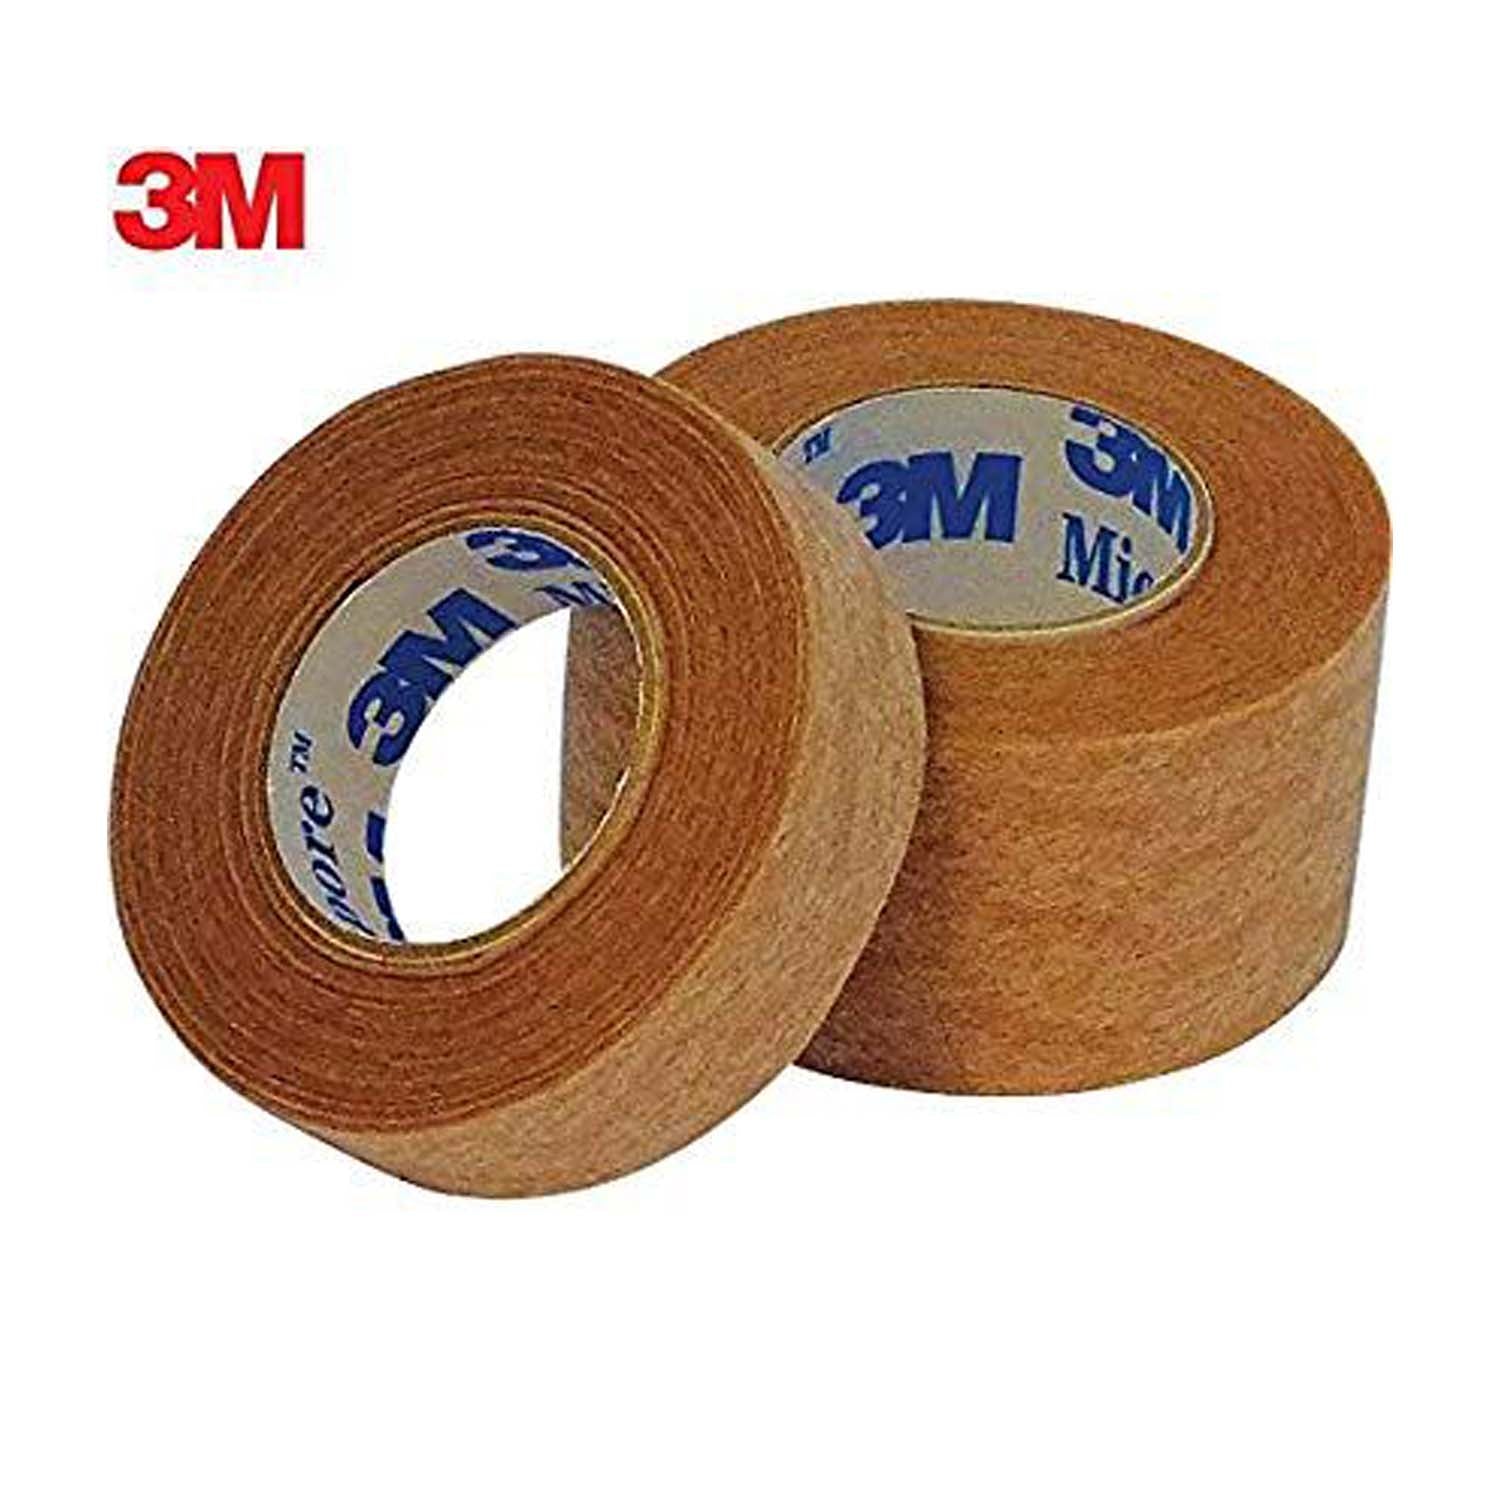 3M Micropore Tan Colour Tape | 1.25cm x 9m | Pack of 24